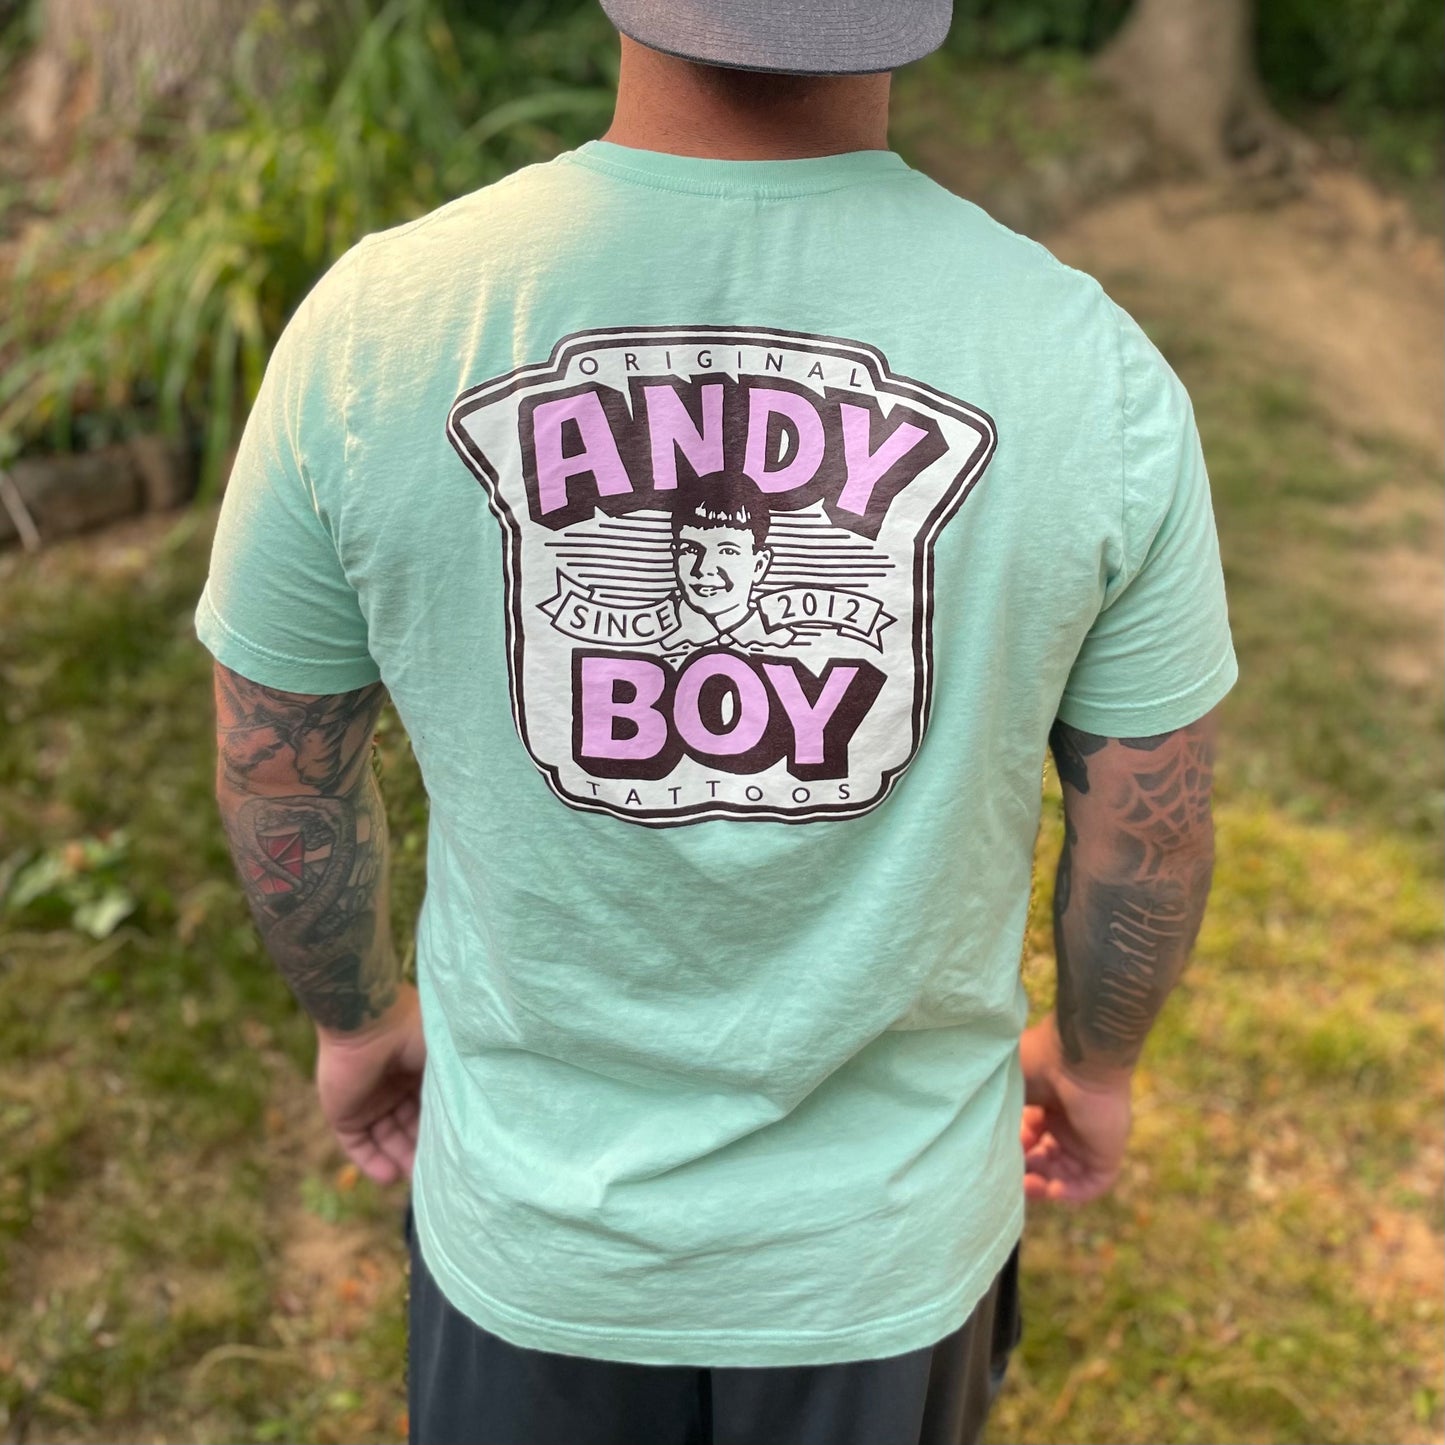 Andy boy tee